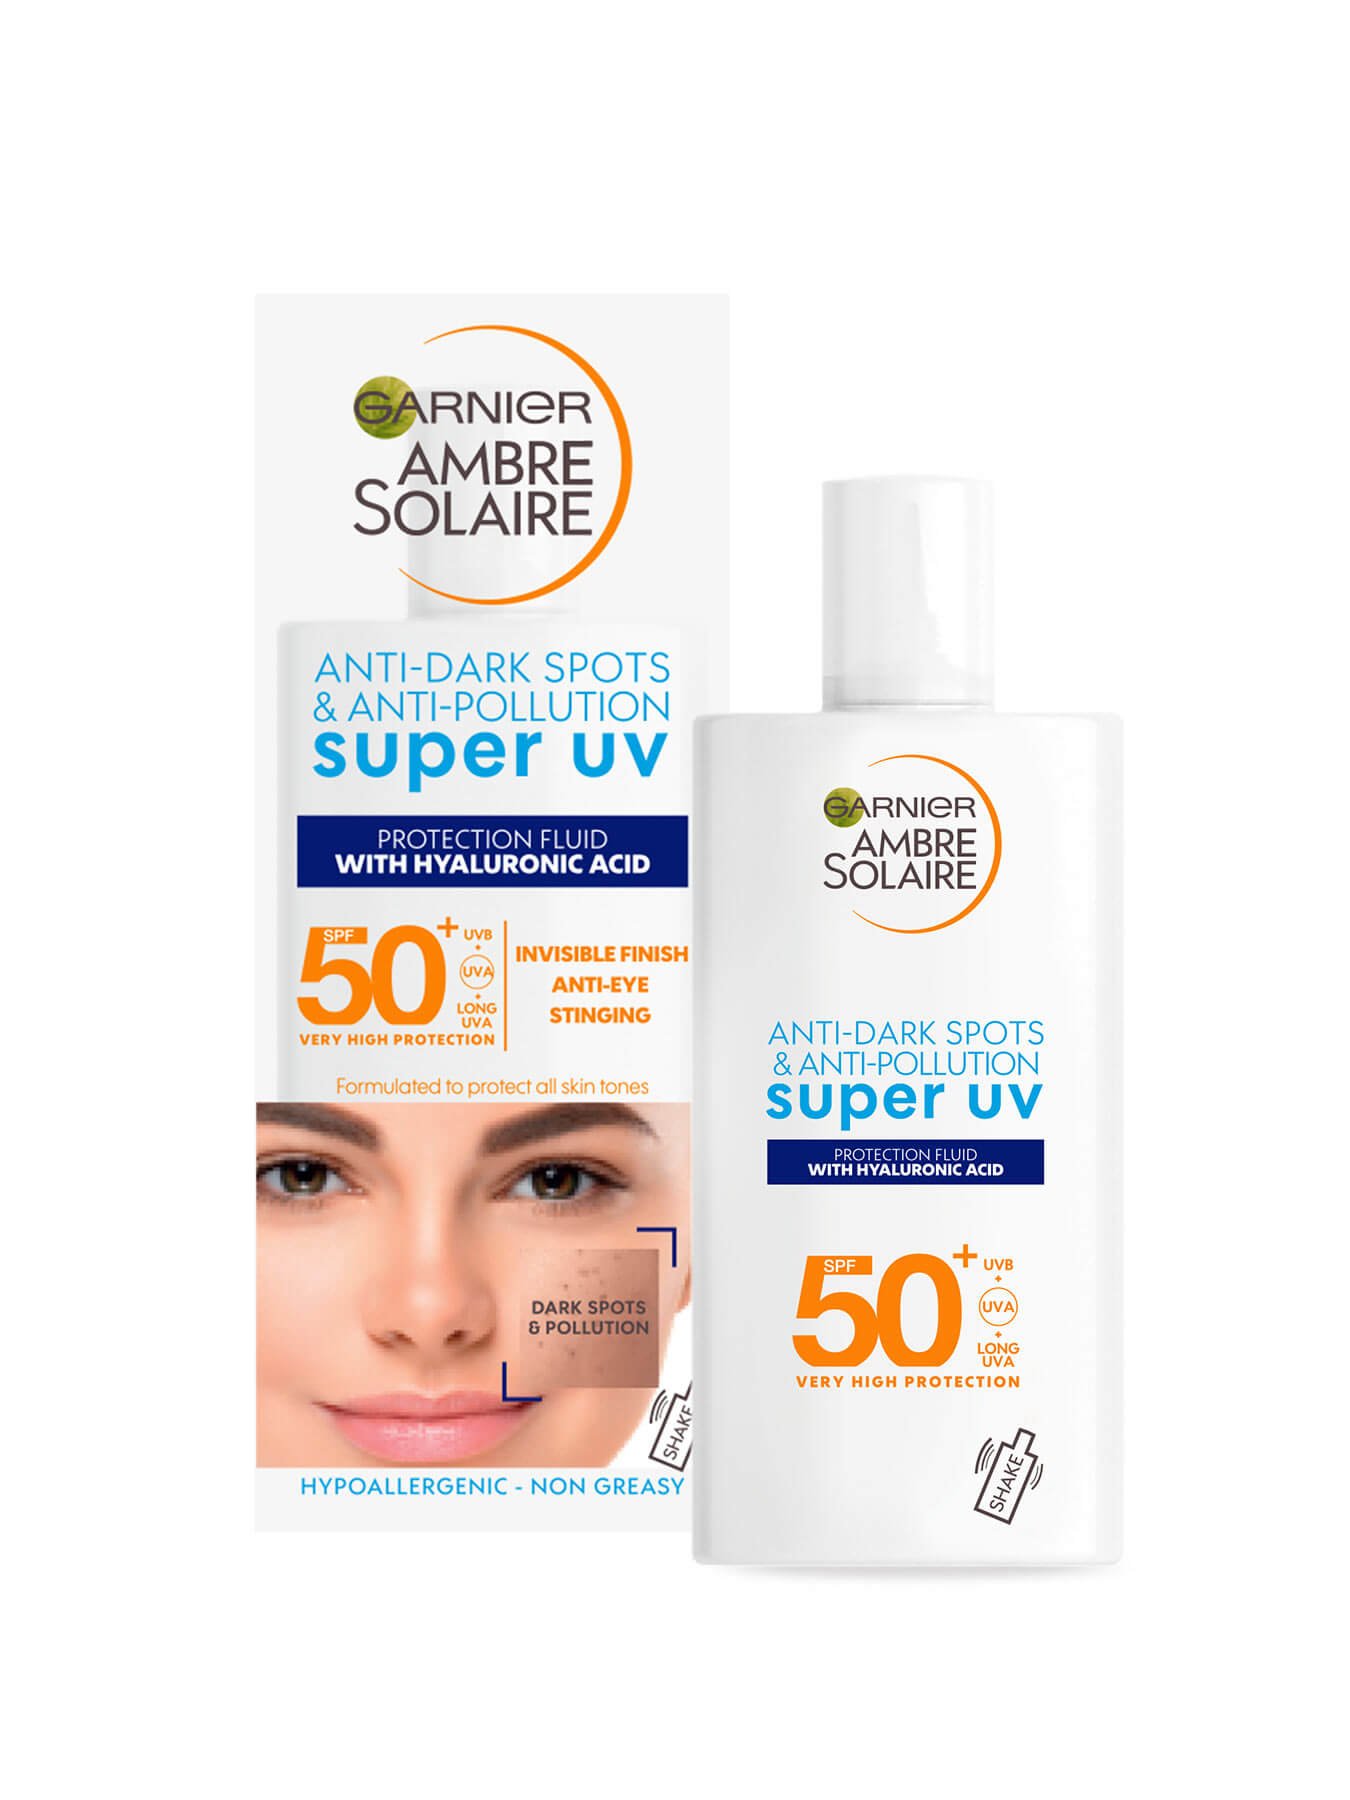 Super UV Ambre Solaire Face Fluid packshot and box